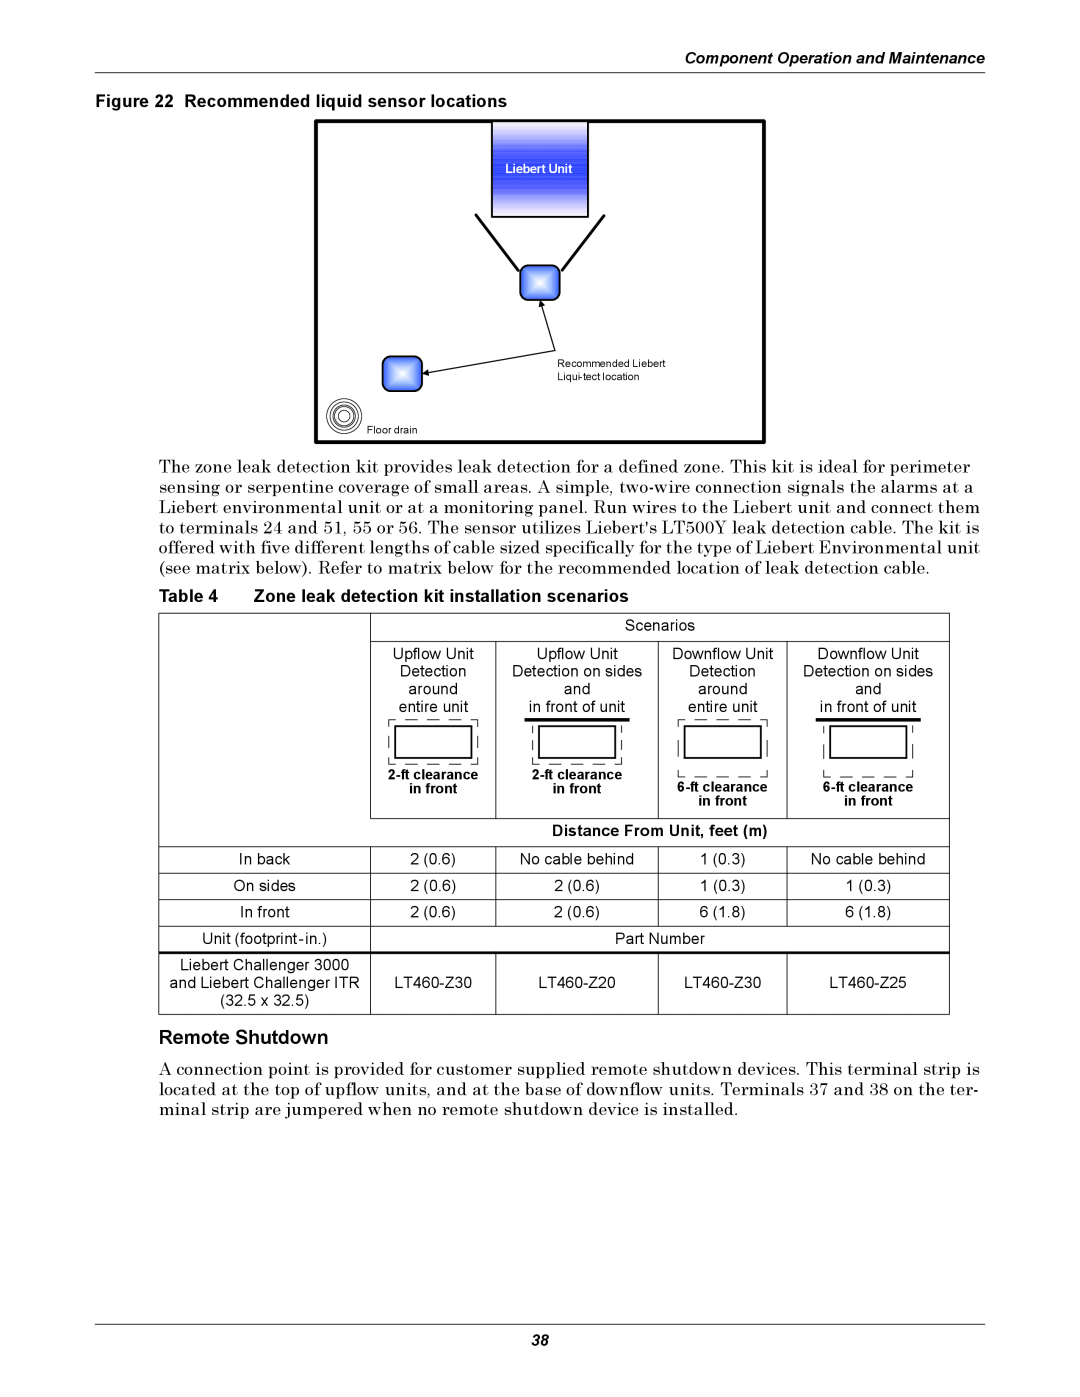 Emerson 3000/ITR manual Remote Shutdown, Recommended liquid sensor locations 